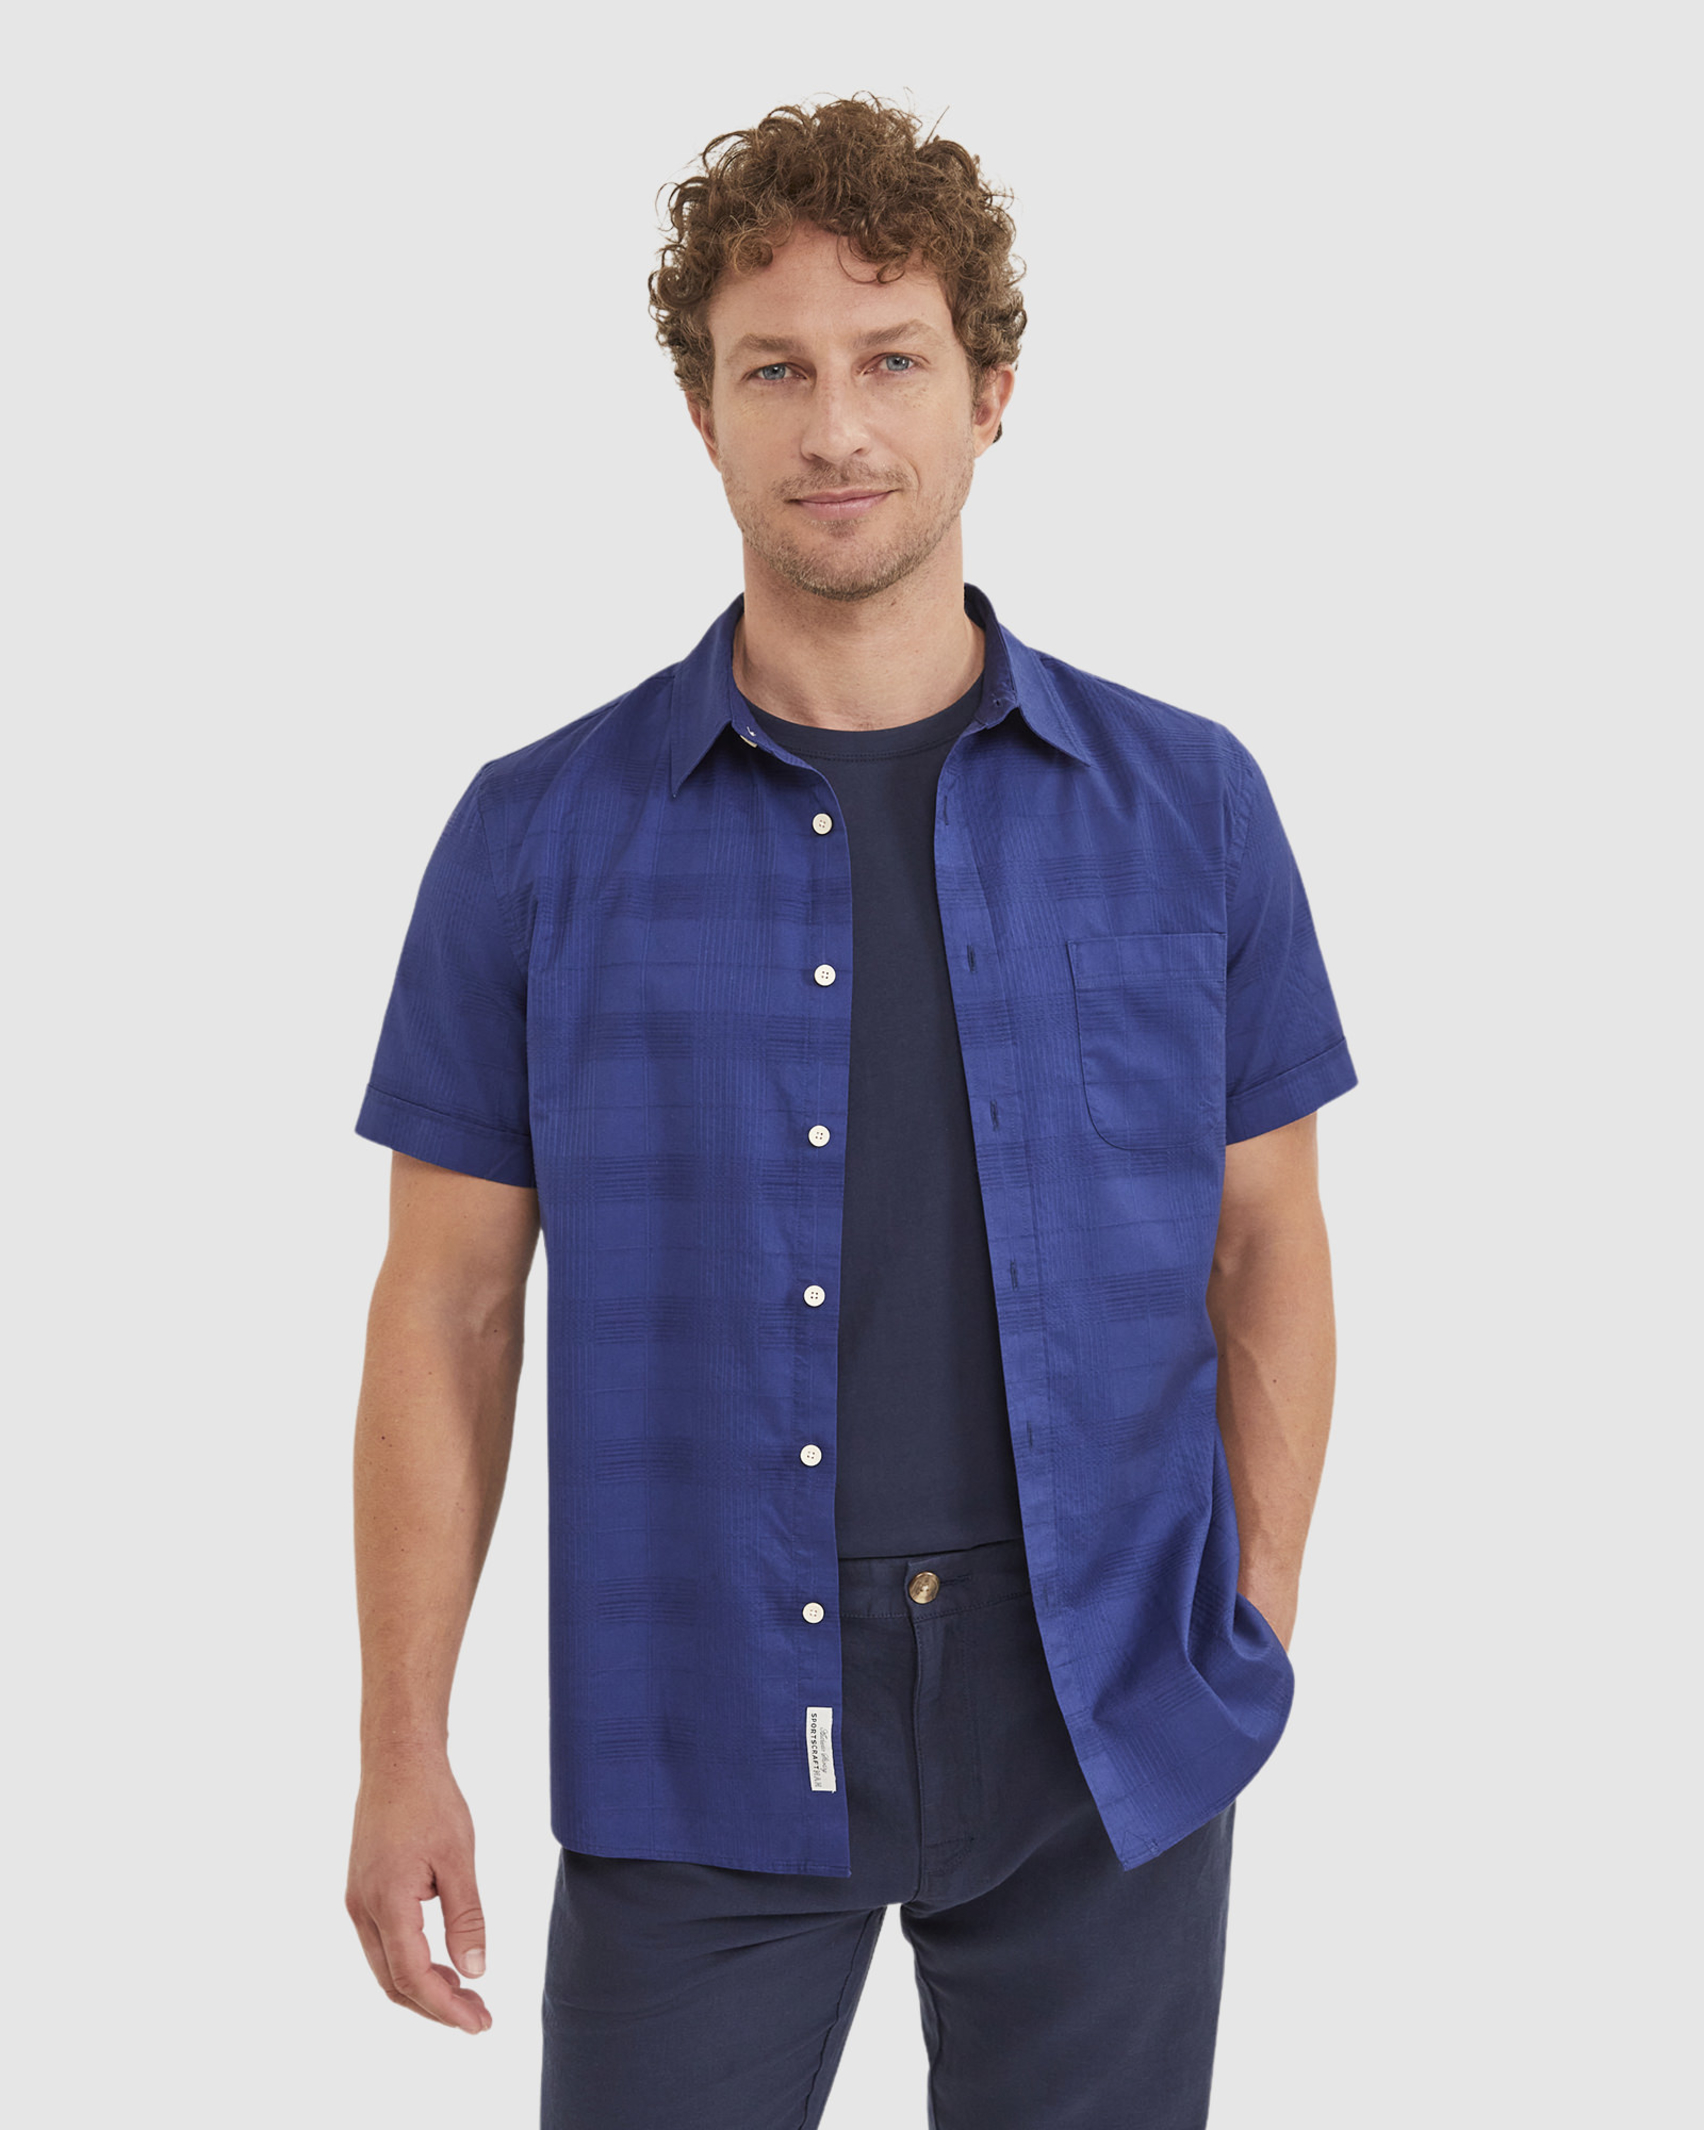 Bains Short Sleeve Shirt in BLUE INK